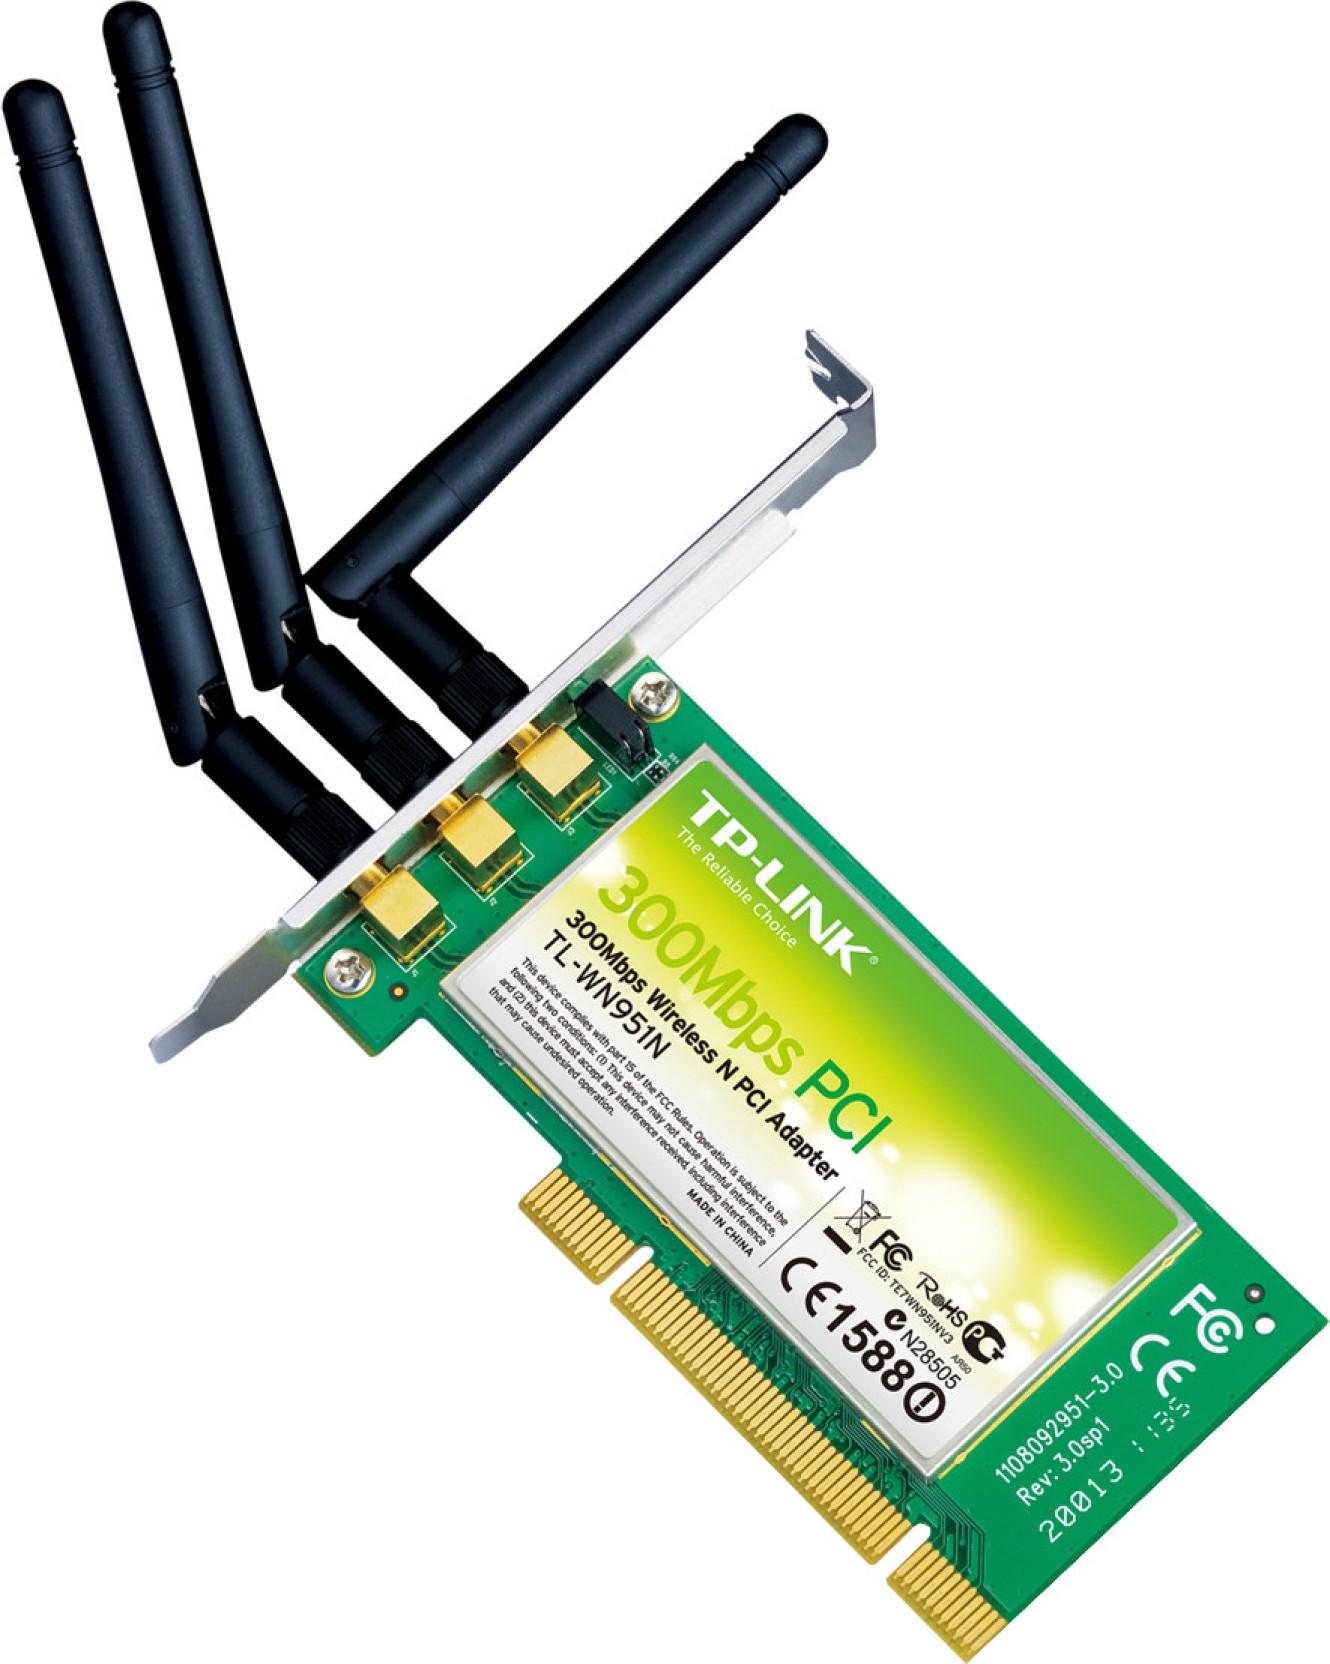 TP-LINK TL-WN951N 300 Mbps Advanced Wireless N PCI Adapter ...